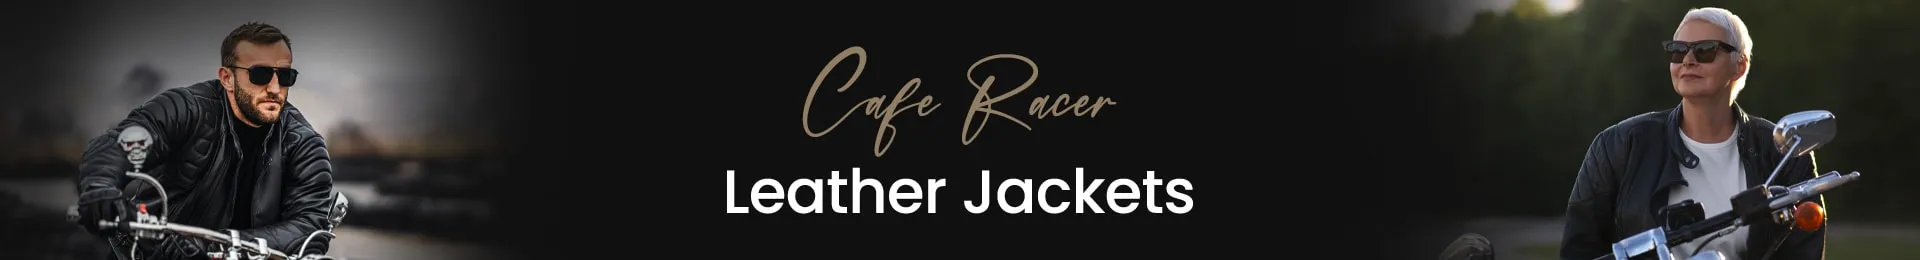 Shop Café Racer Leather Jackets at SCIN